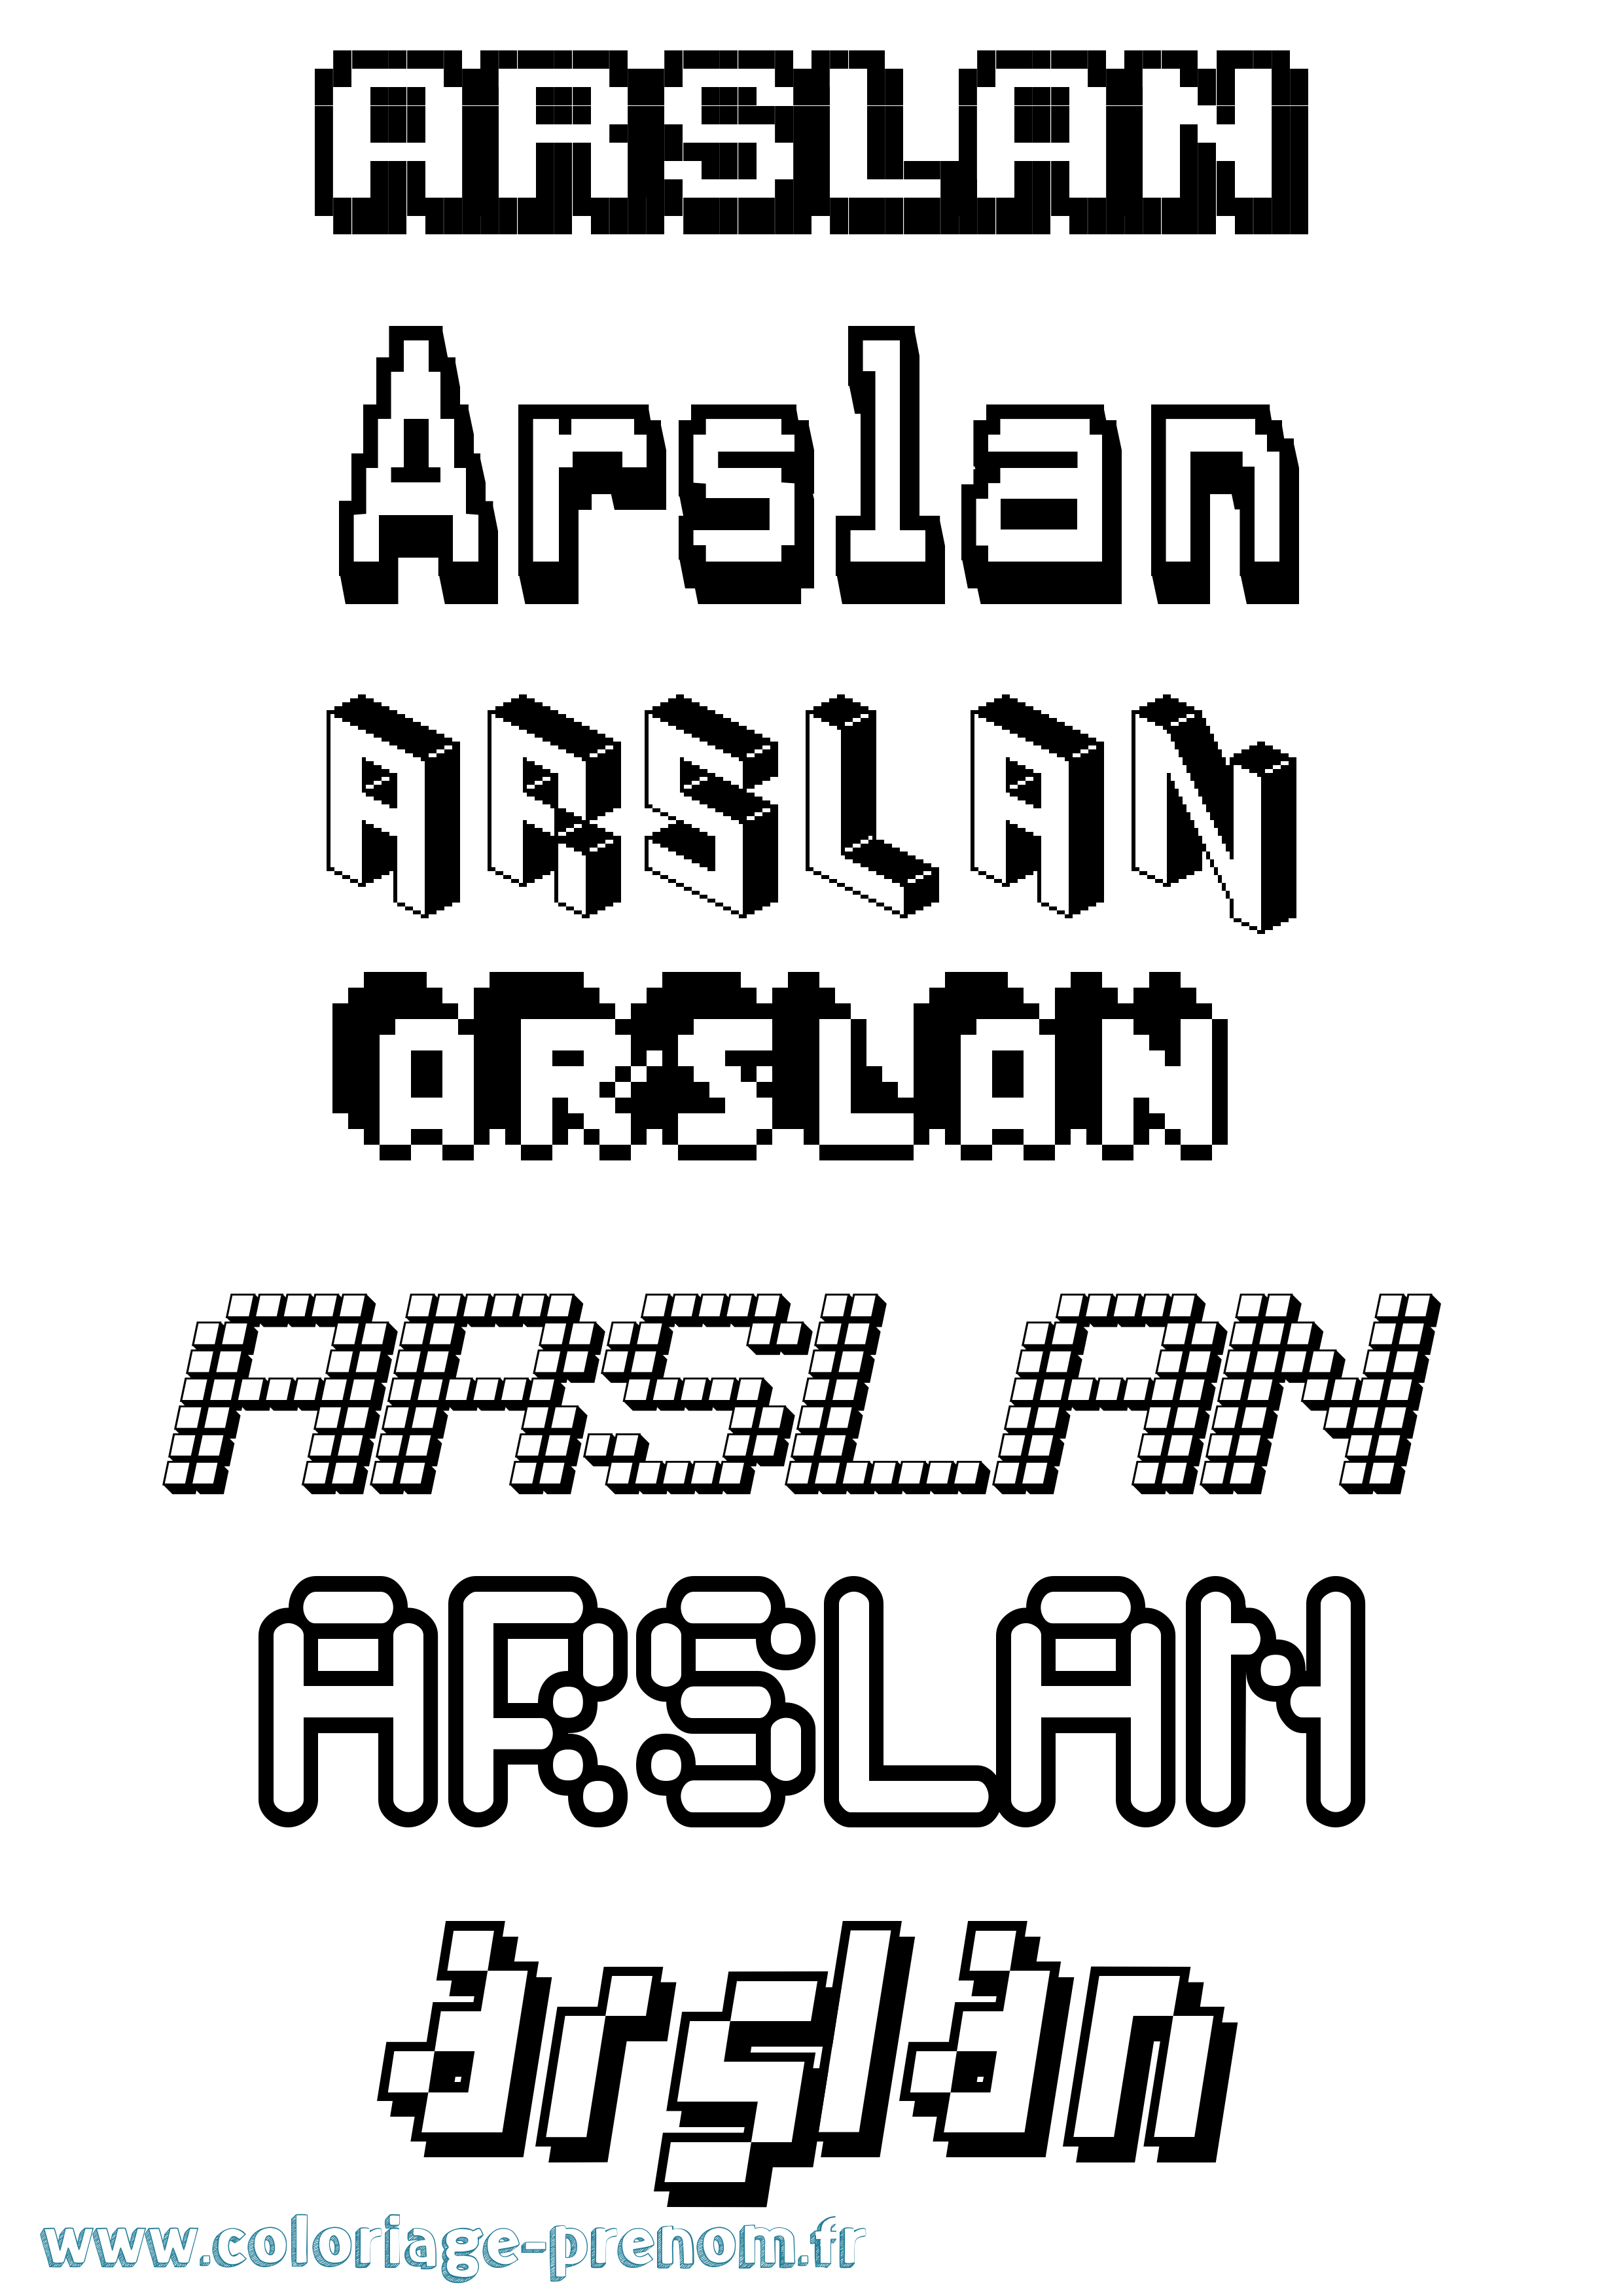 Coloriage prénom Arslan Pixel